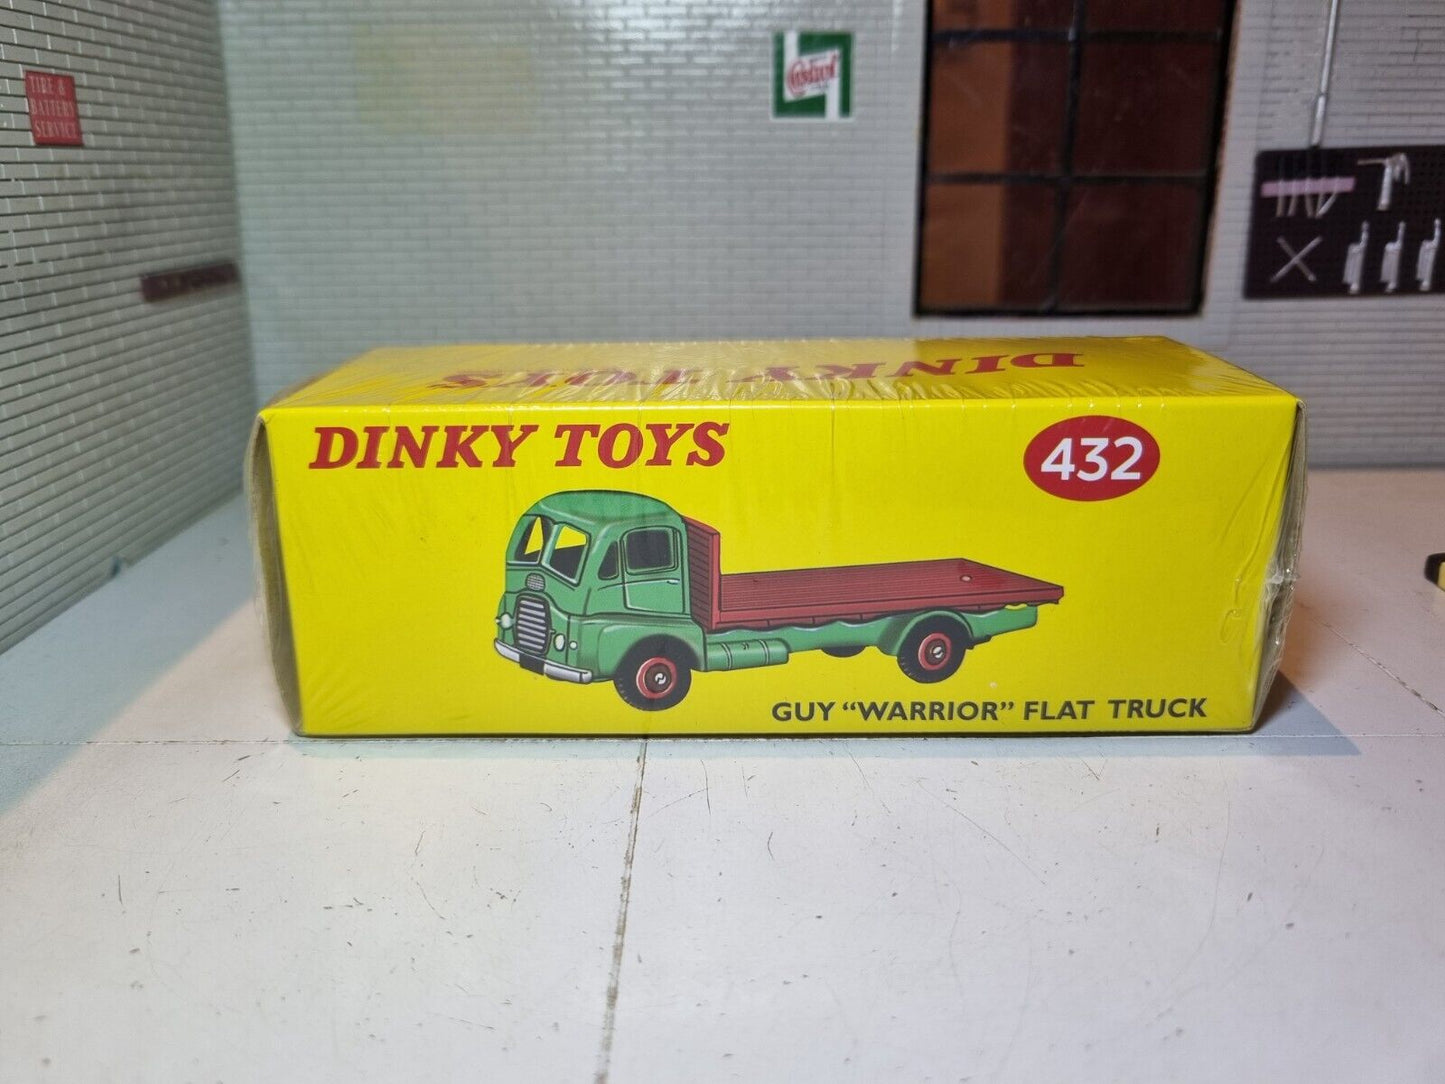 Guy Warrior Flat Truck #432 Dinky